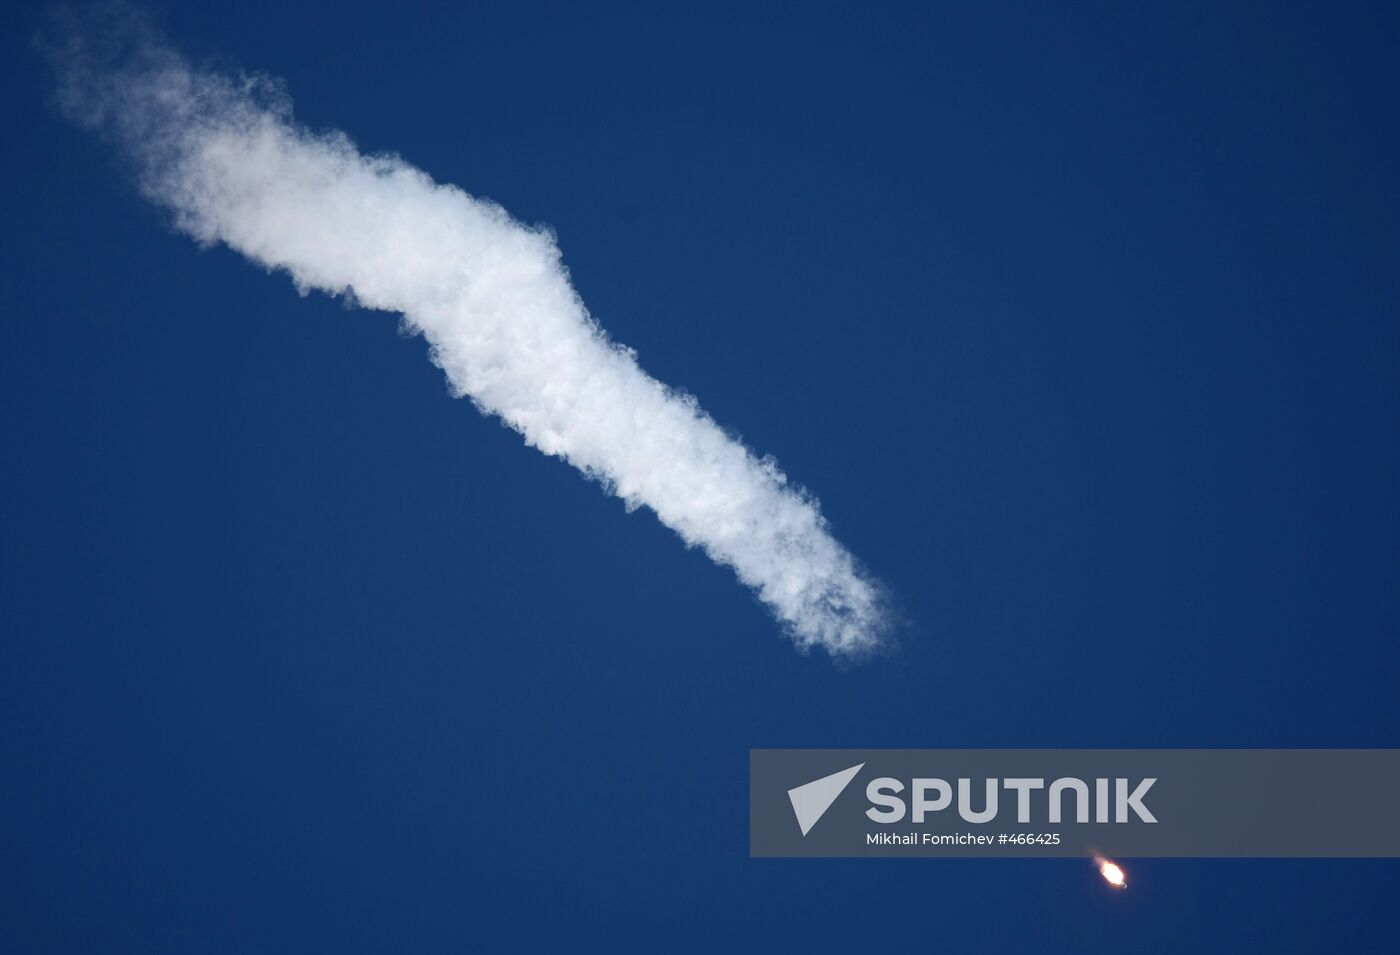 Soyuz TMA-17 spacecraft lifts off from Baikonur